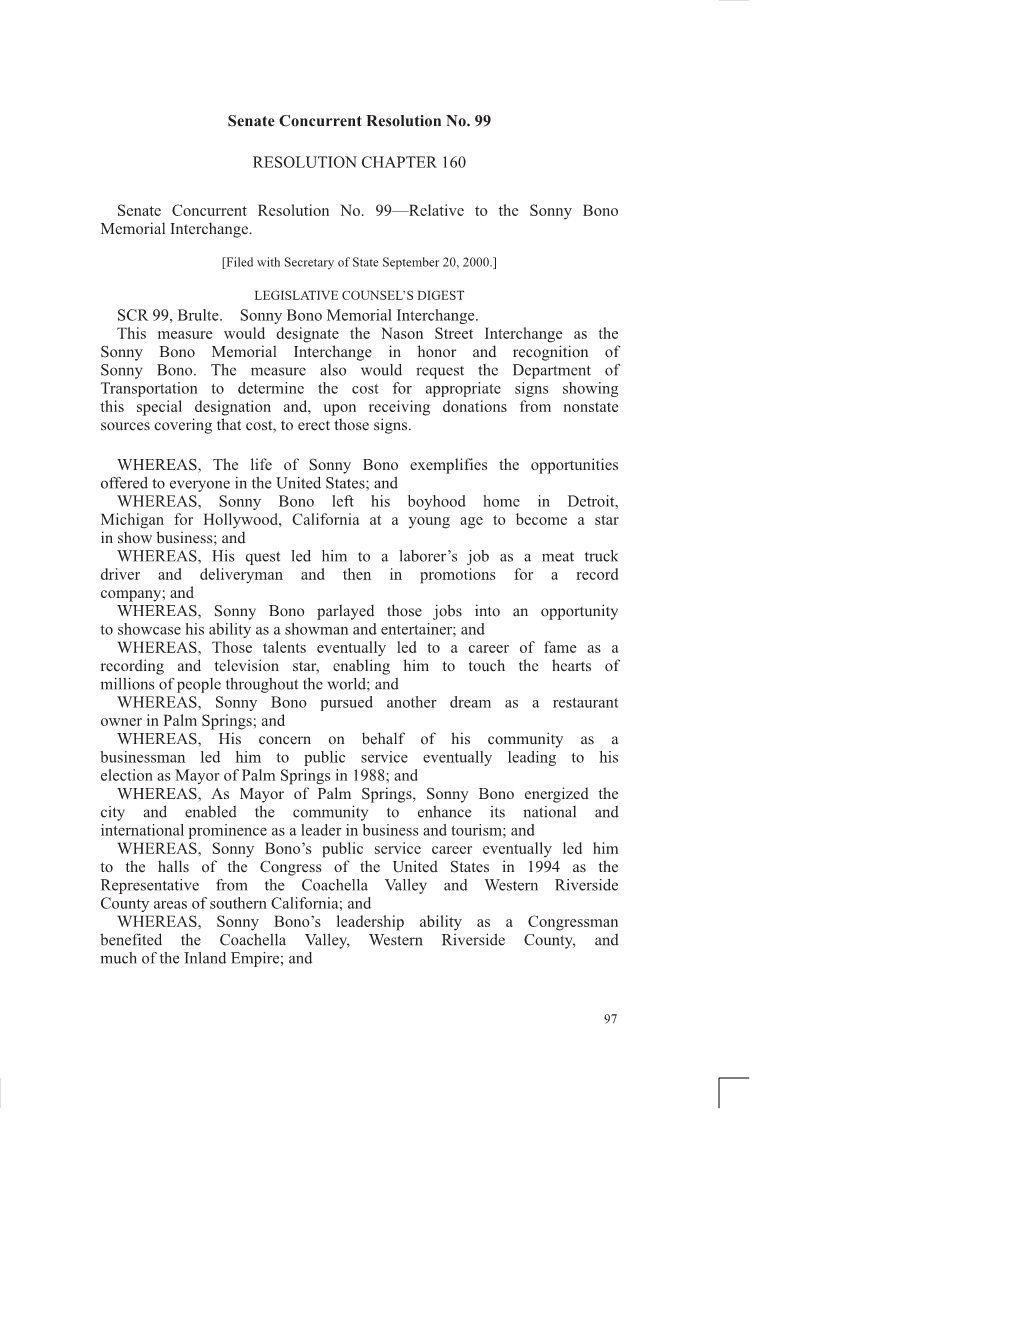 Senate Concurrent Resolution No. 99 RESOLUTION